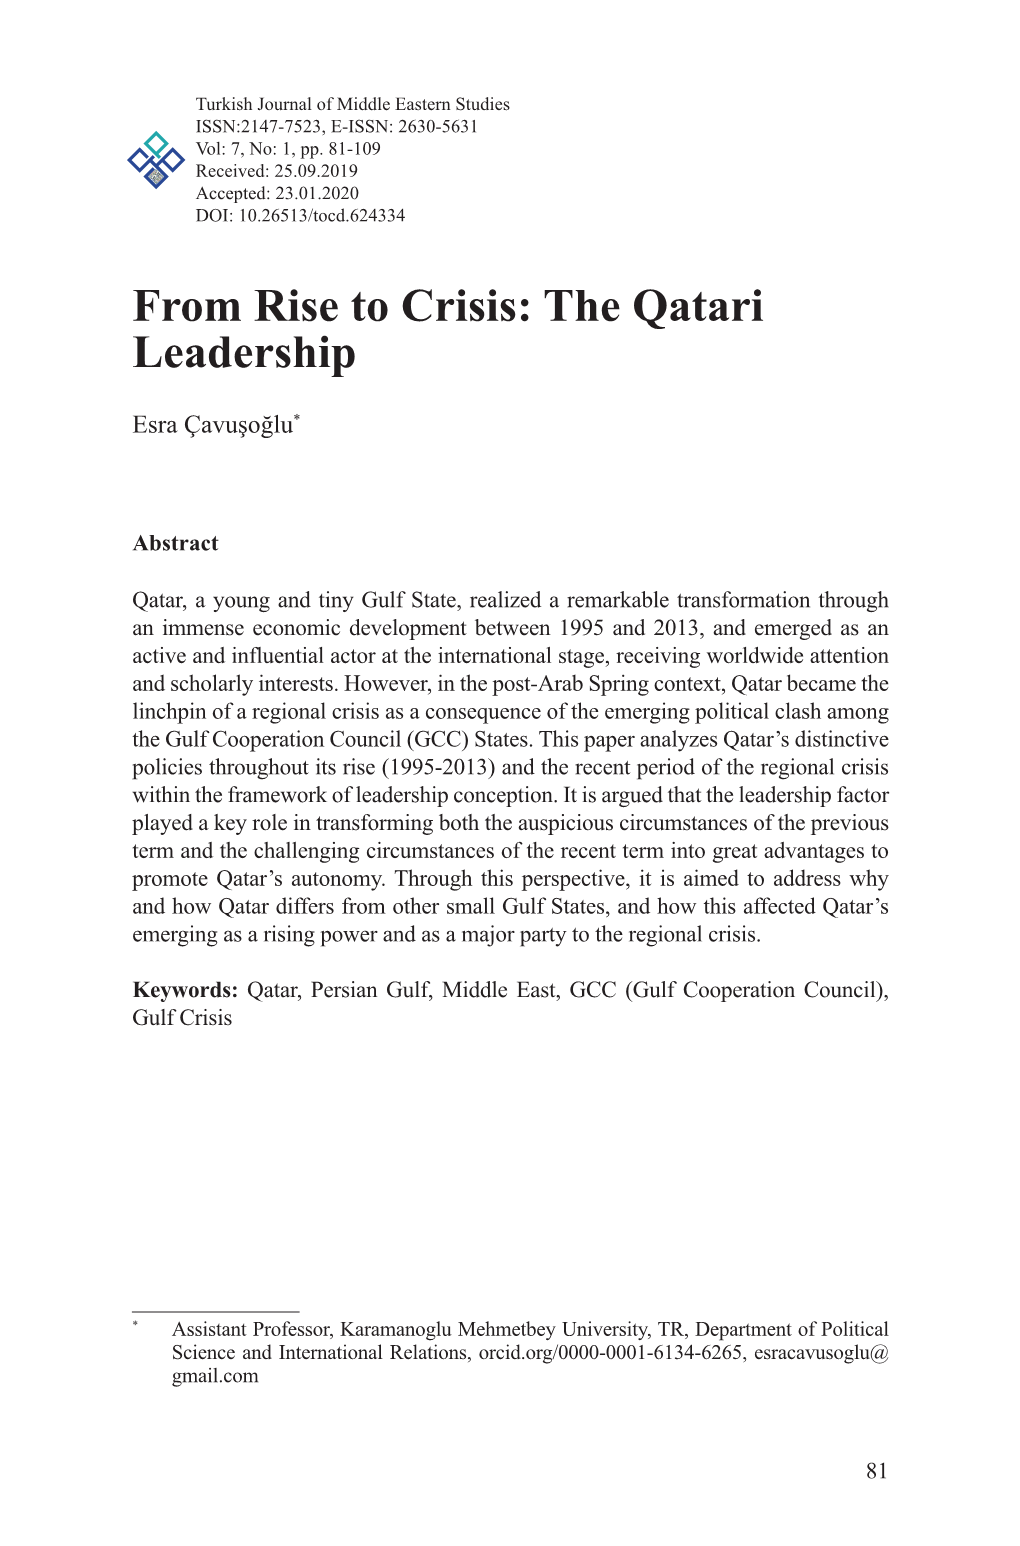 The Qatari Leadership